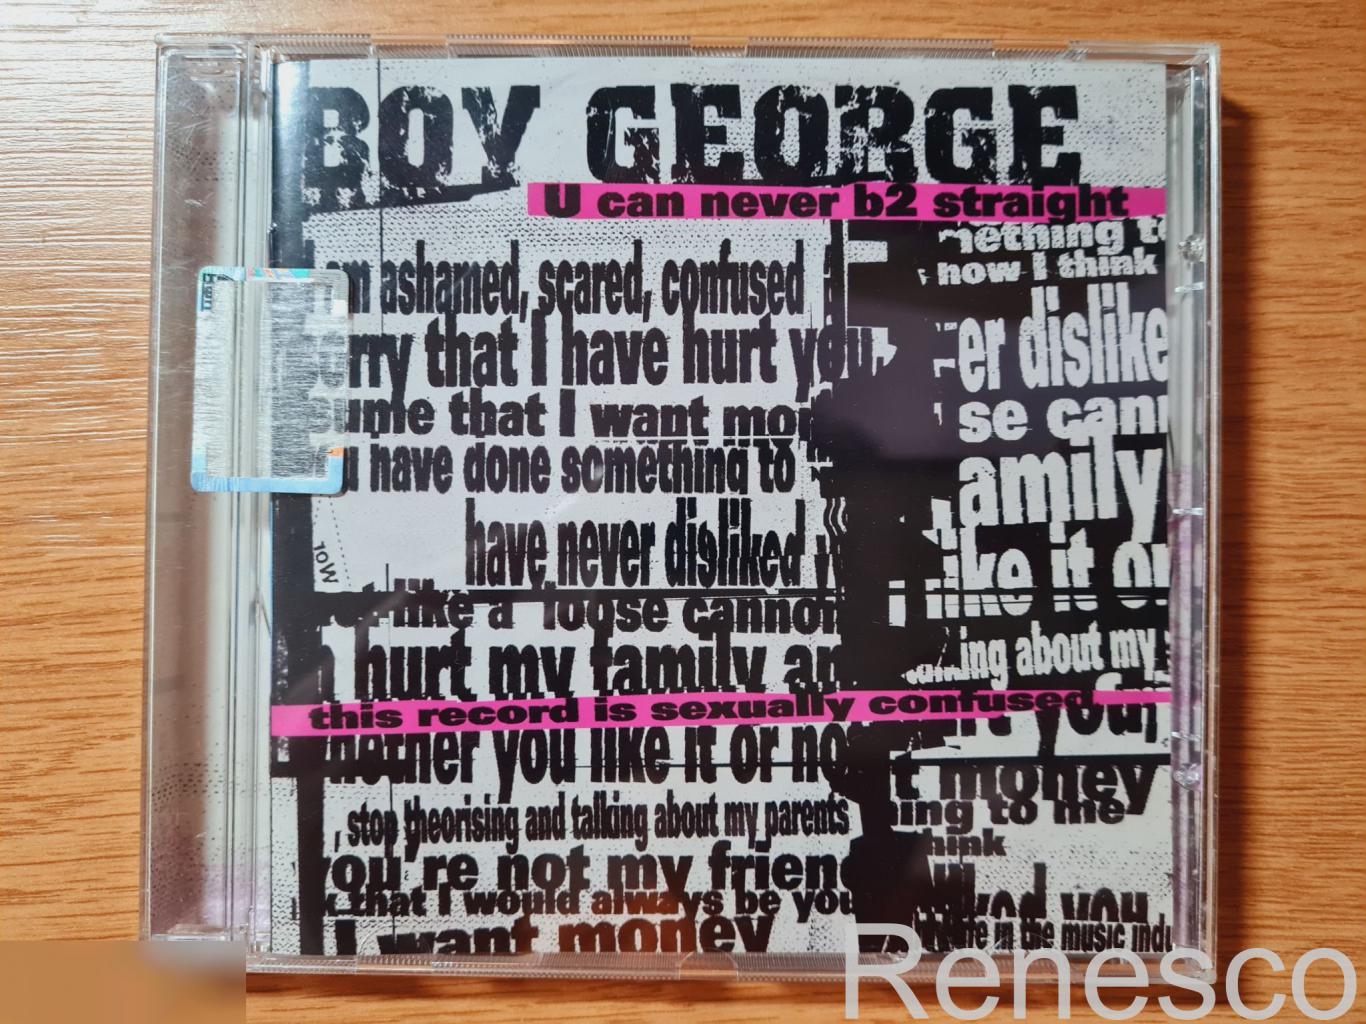 Boy George ?– U Can Never B2 Straight (Europe) (2002)